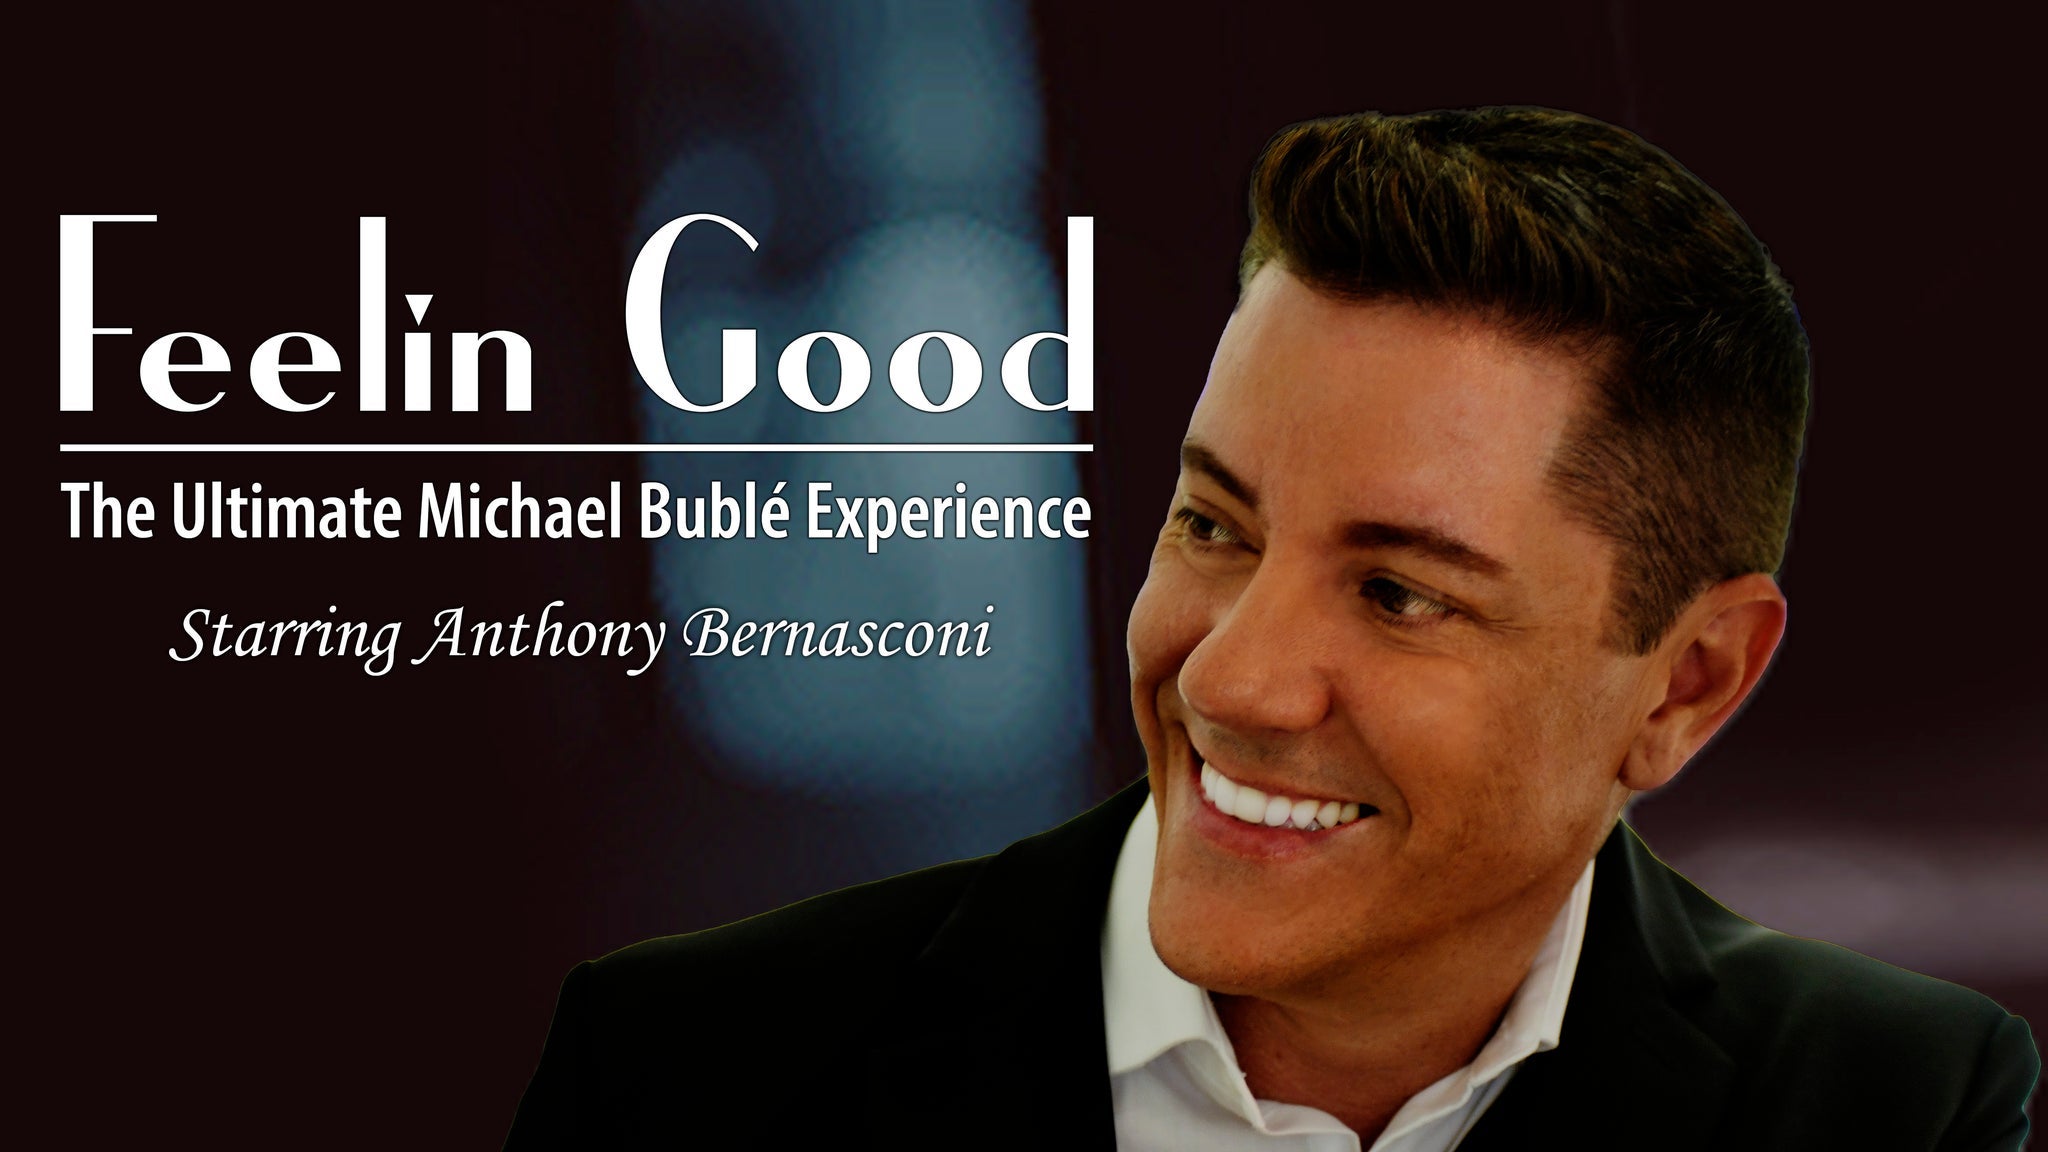 Feelin' Good: The Ultimate Michael Bublé Experience